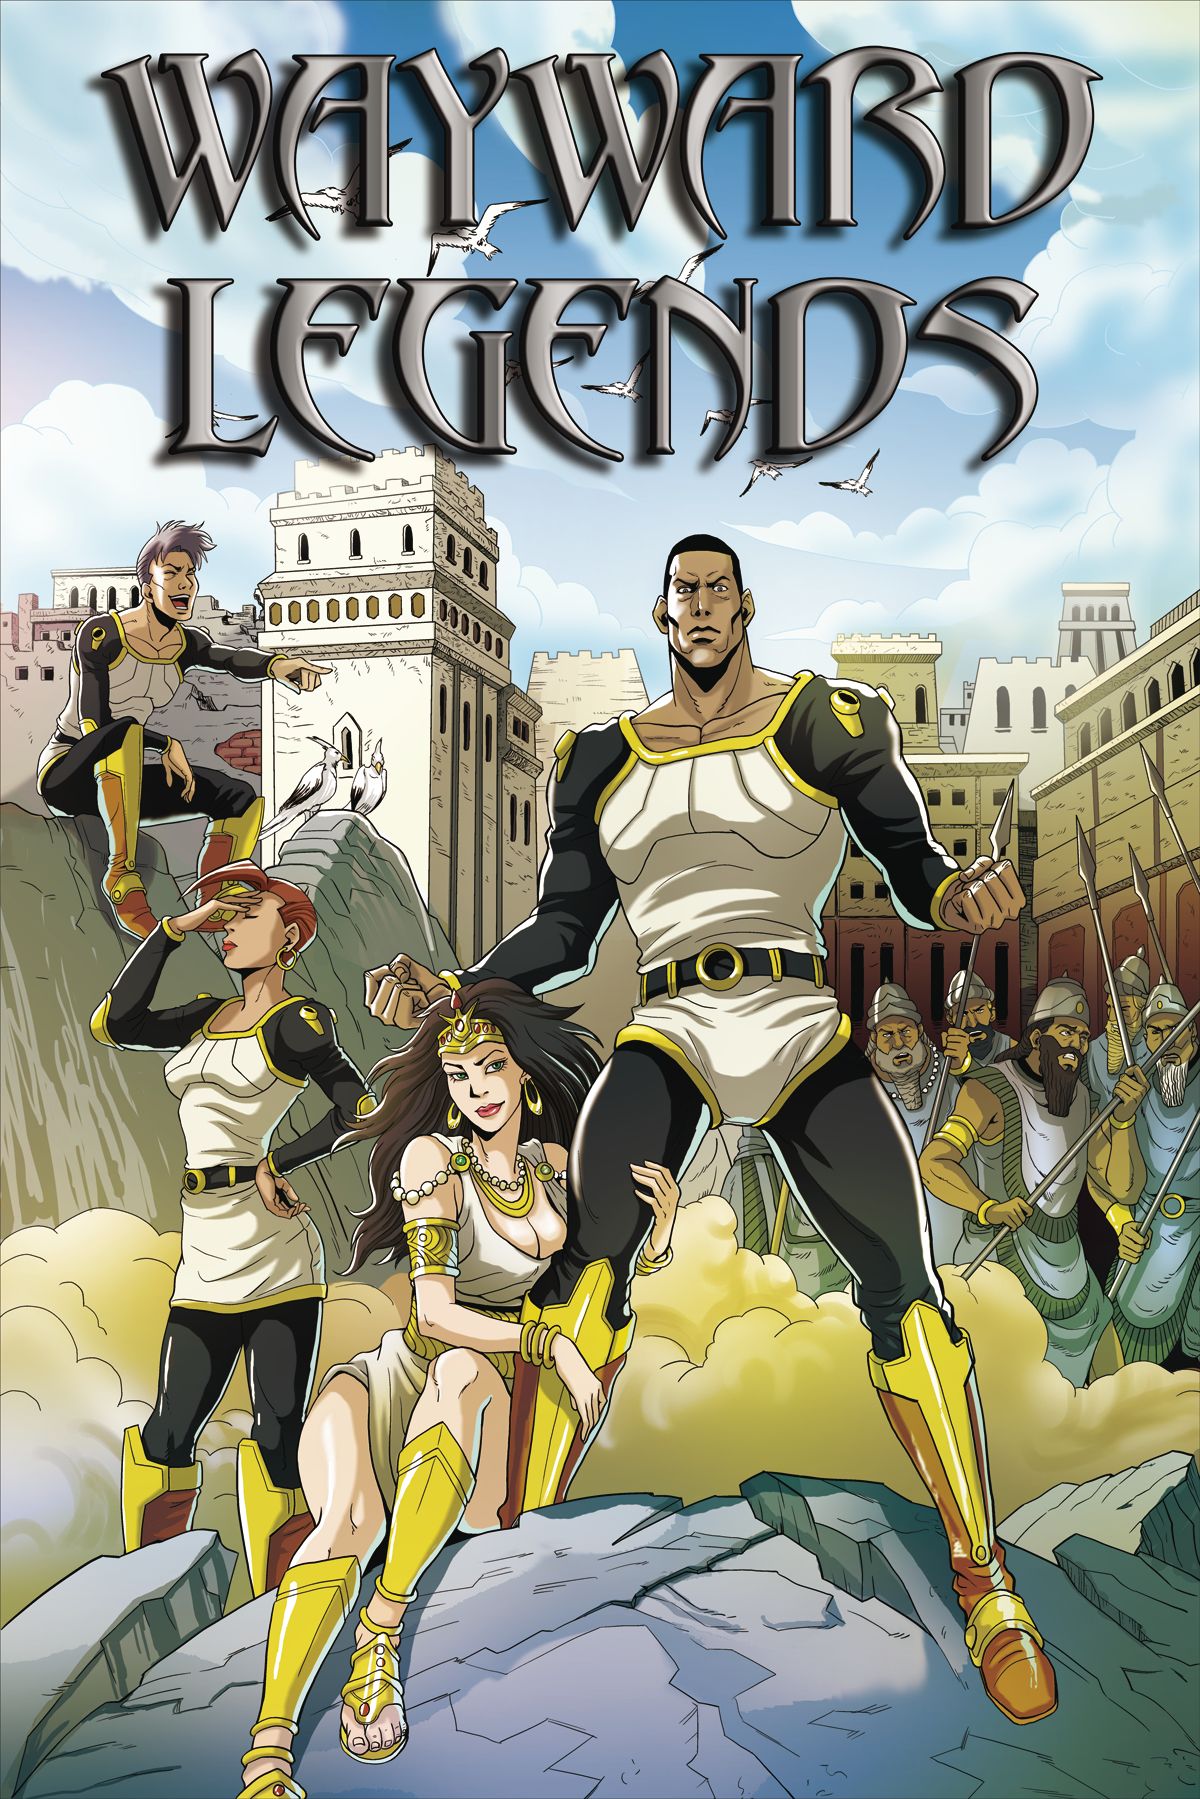 Wayward Legends #3 Comic